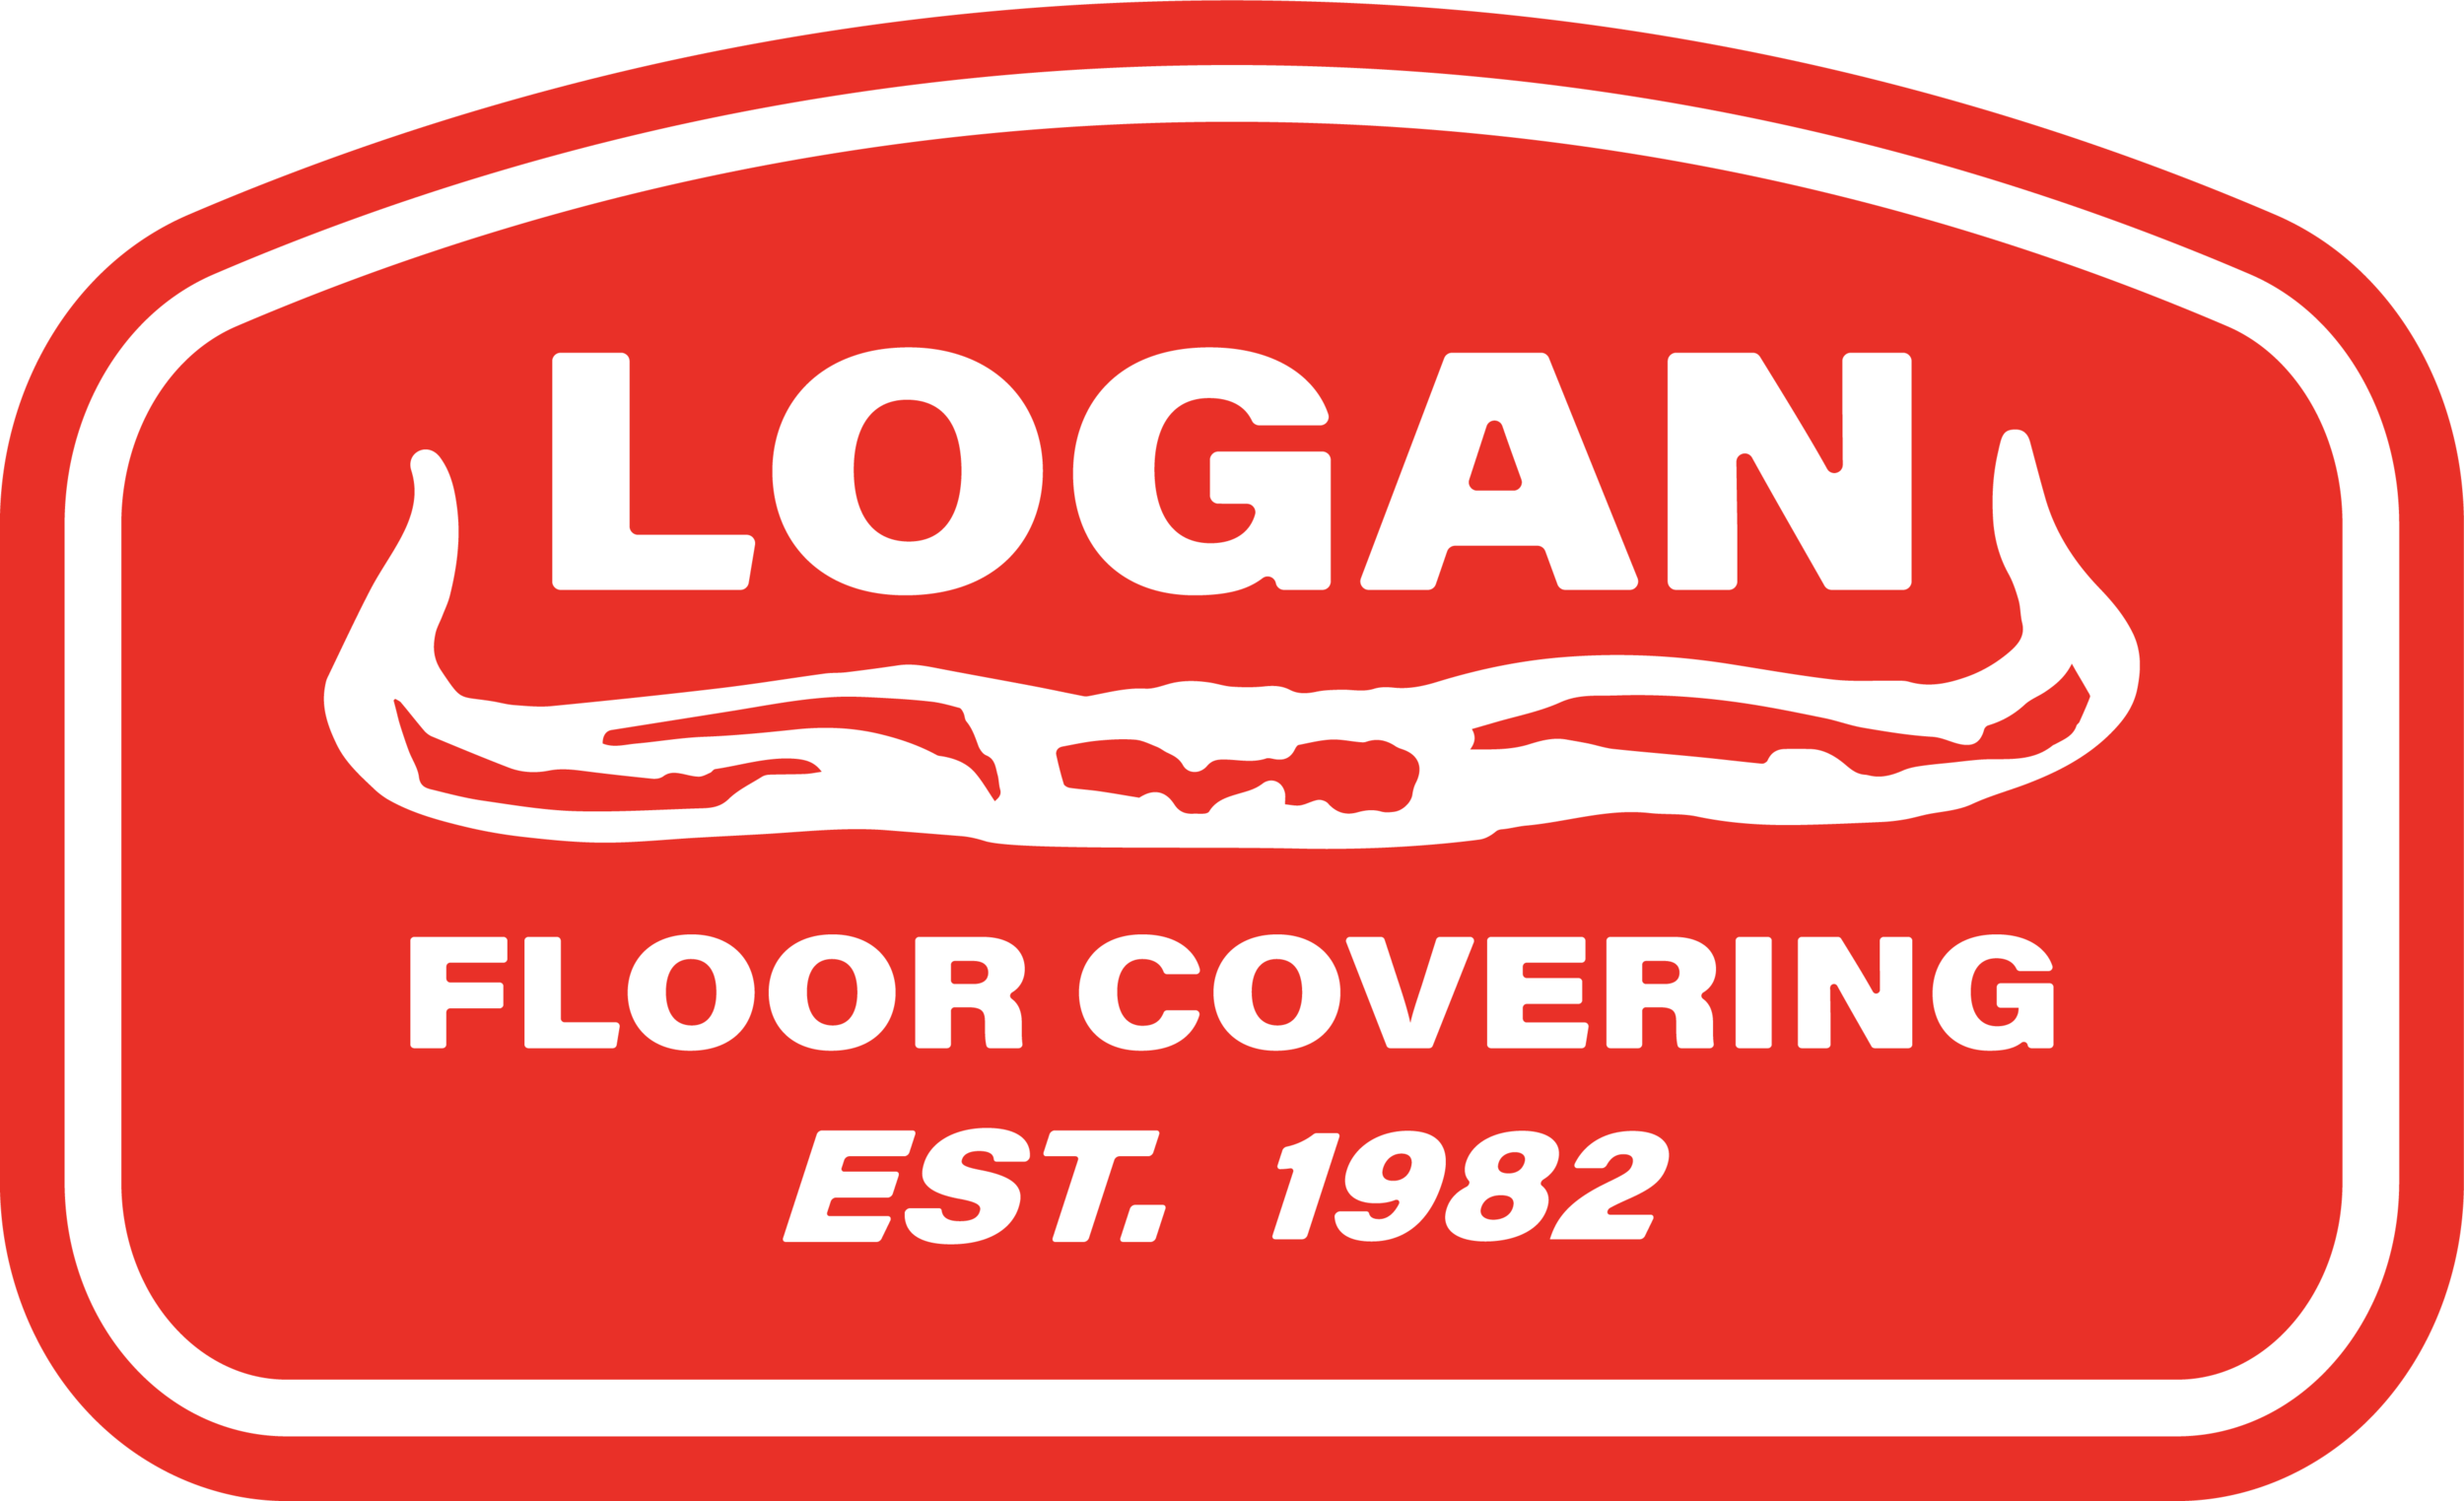 LOGAN FLOOR COVERING